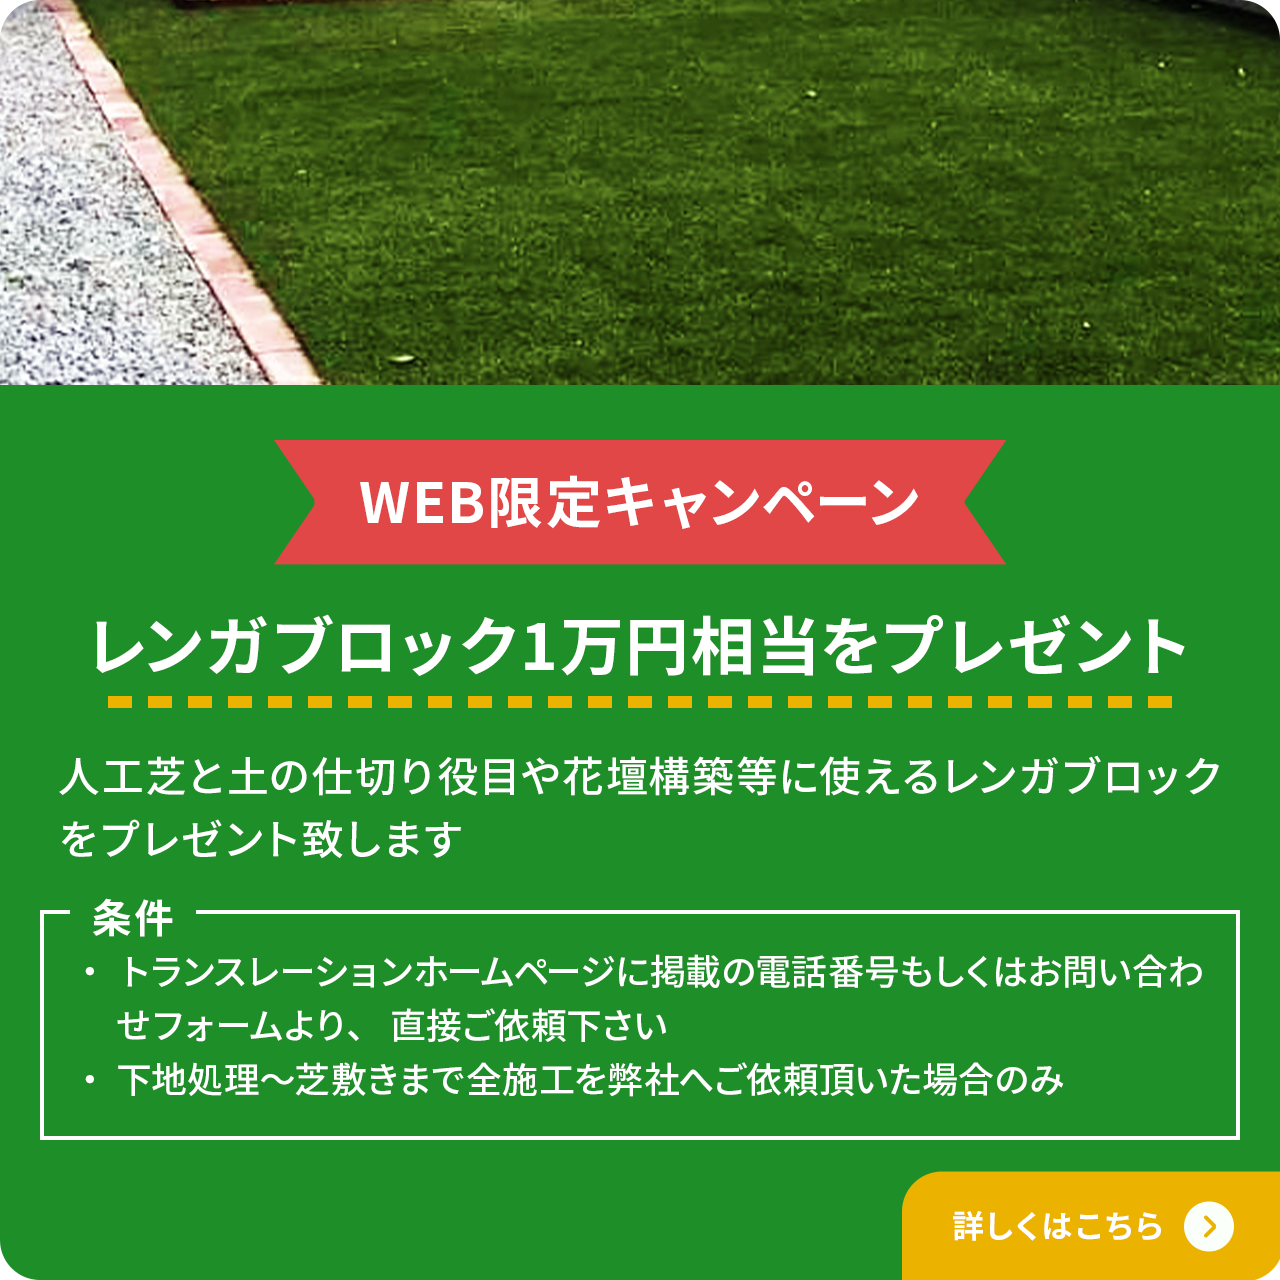 WEB限定キャンペーン レンガブロック1万円相当をプレゼント 人工芝と土の仕切り役目や花壇構築等に使えるレンガブロックをプレゼント致します 